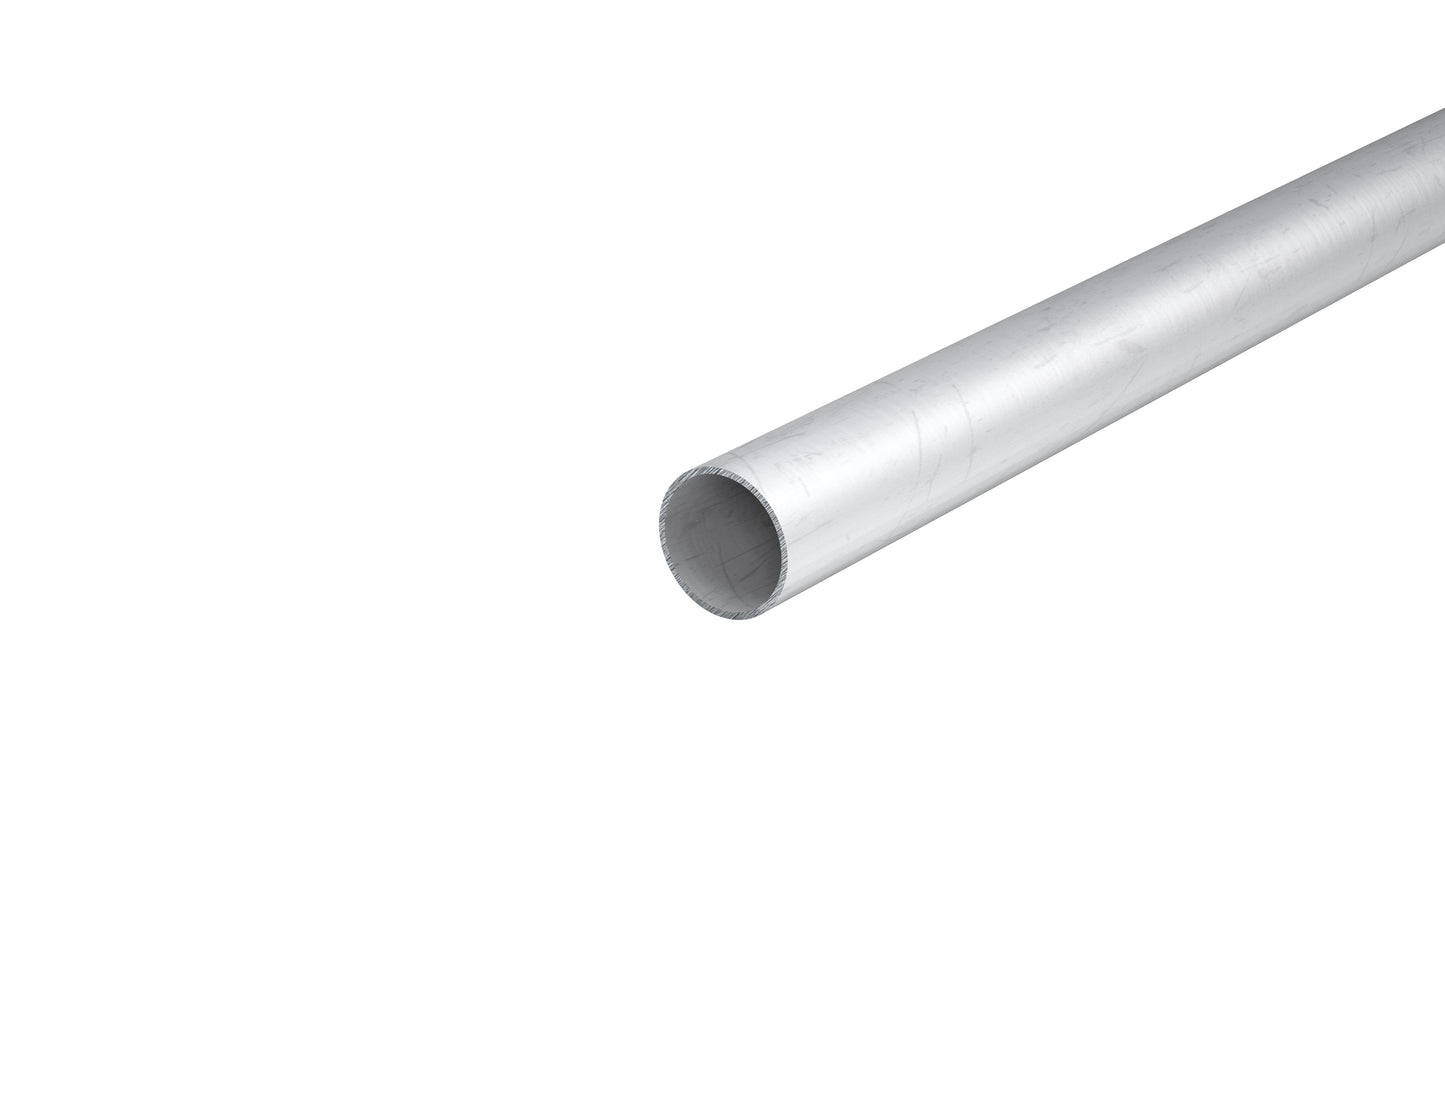 1-1/4" OD .058" wall round aluminum tube, 16 gauge 1.25" aluminum tube, 6063-T832 drawn .058" wall